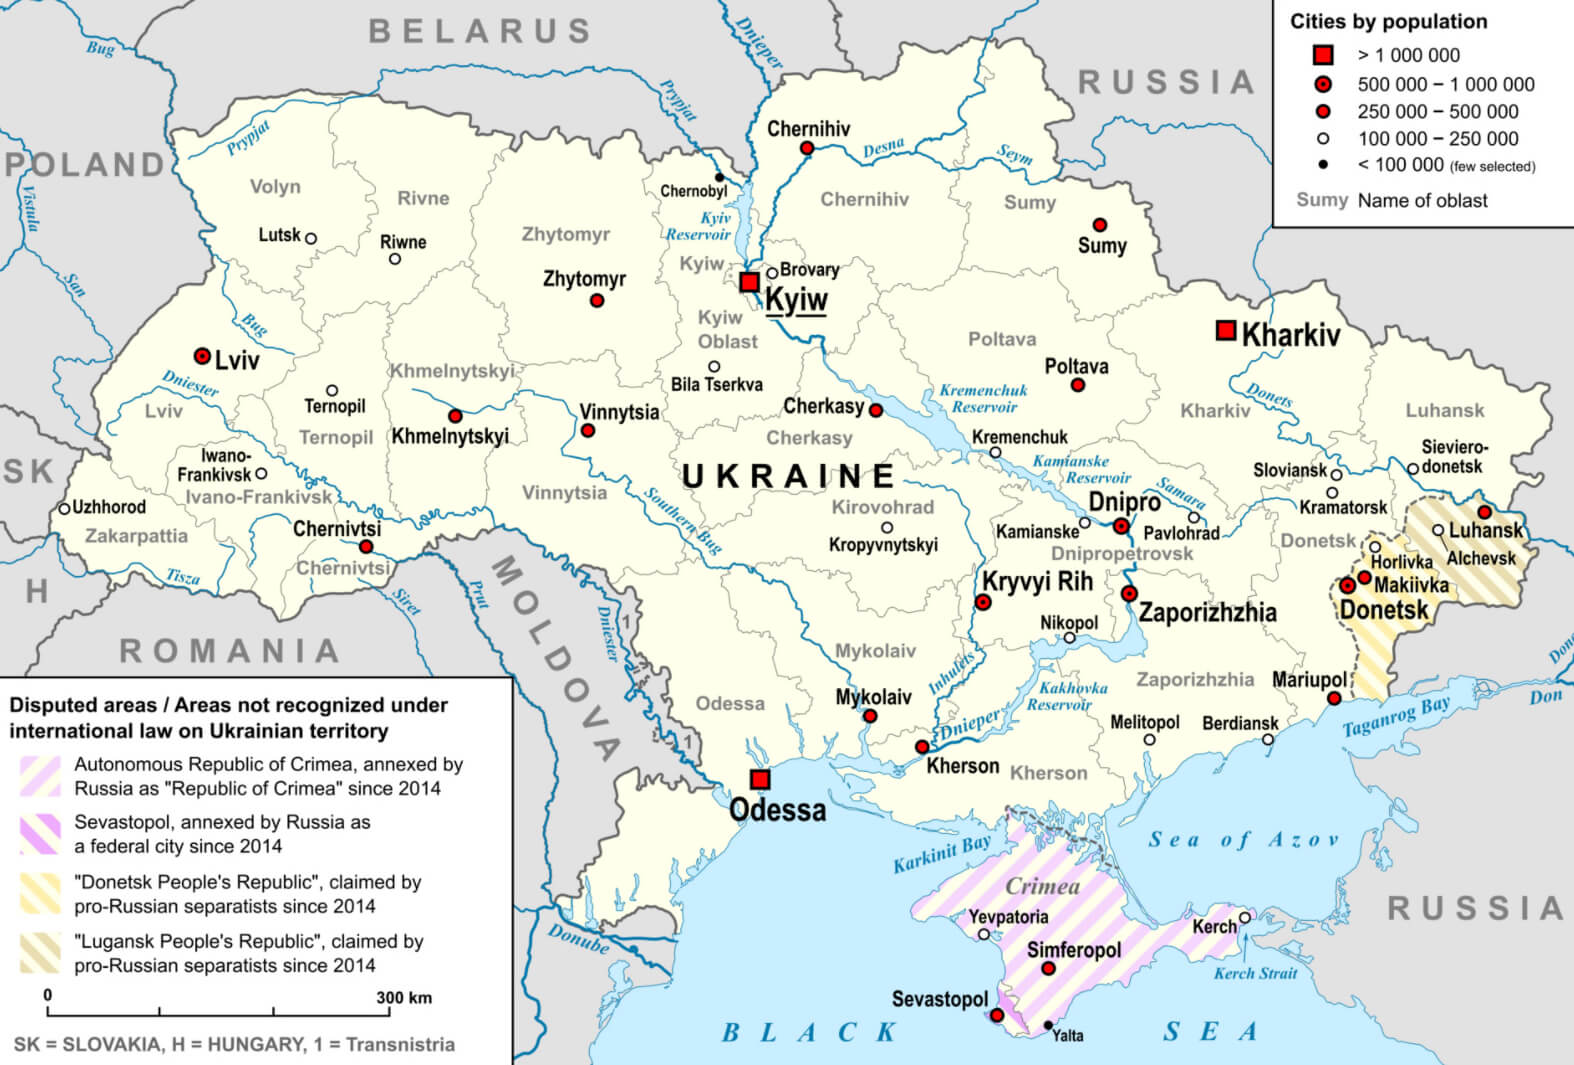 Ukraine Cities Map by Population